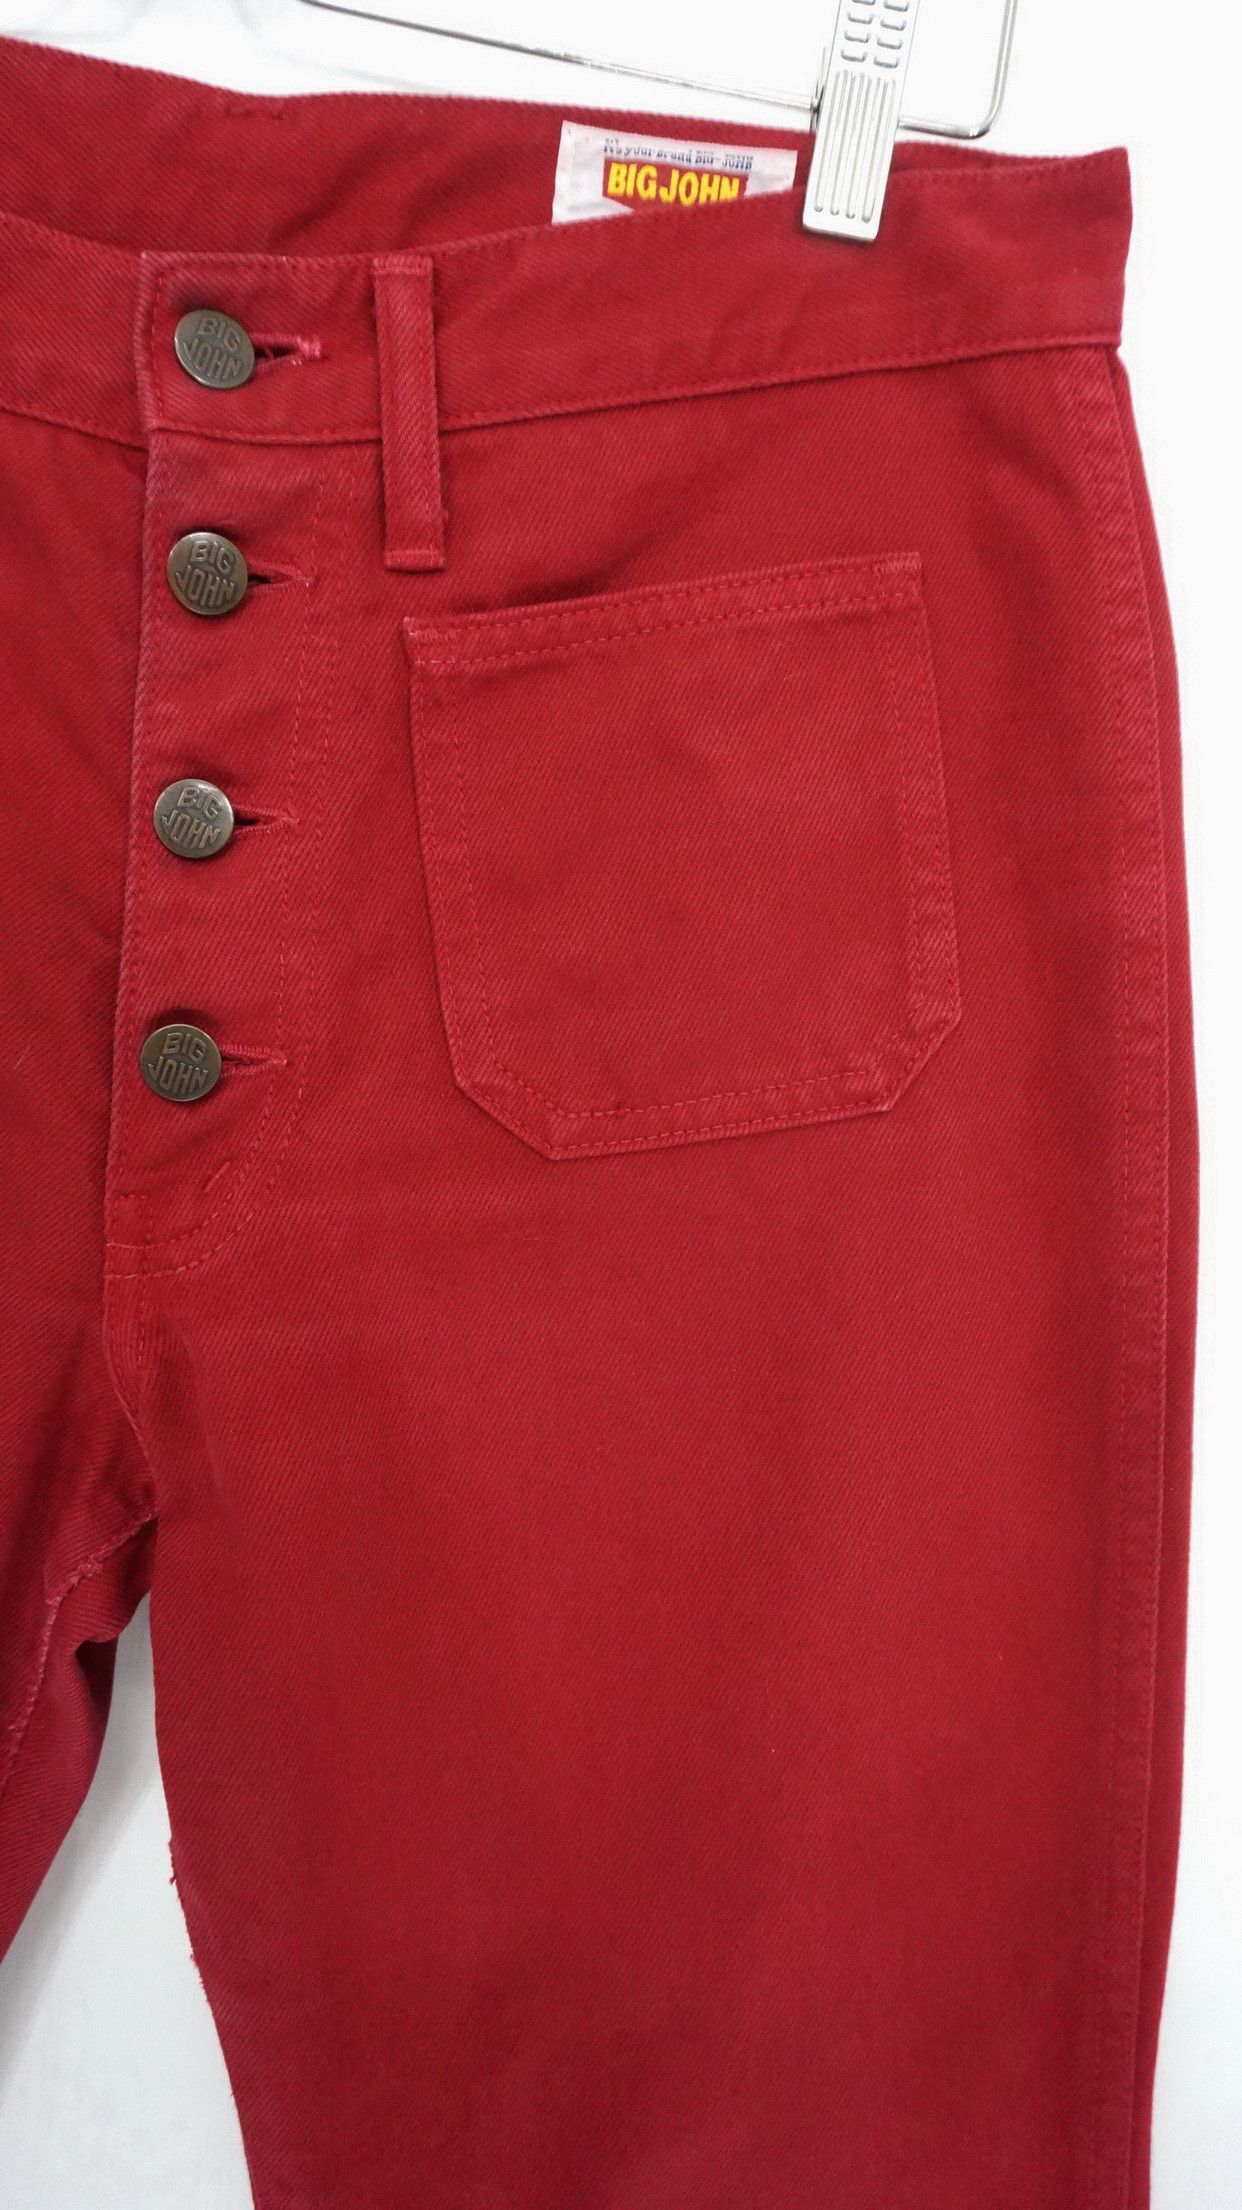 Big John 🔥HolyFlare! BIG JOHN Japan Vintage Flared Red Bush Jeans Size US 32 / EU 48 - 4 Thumbnail